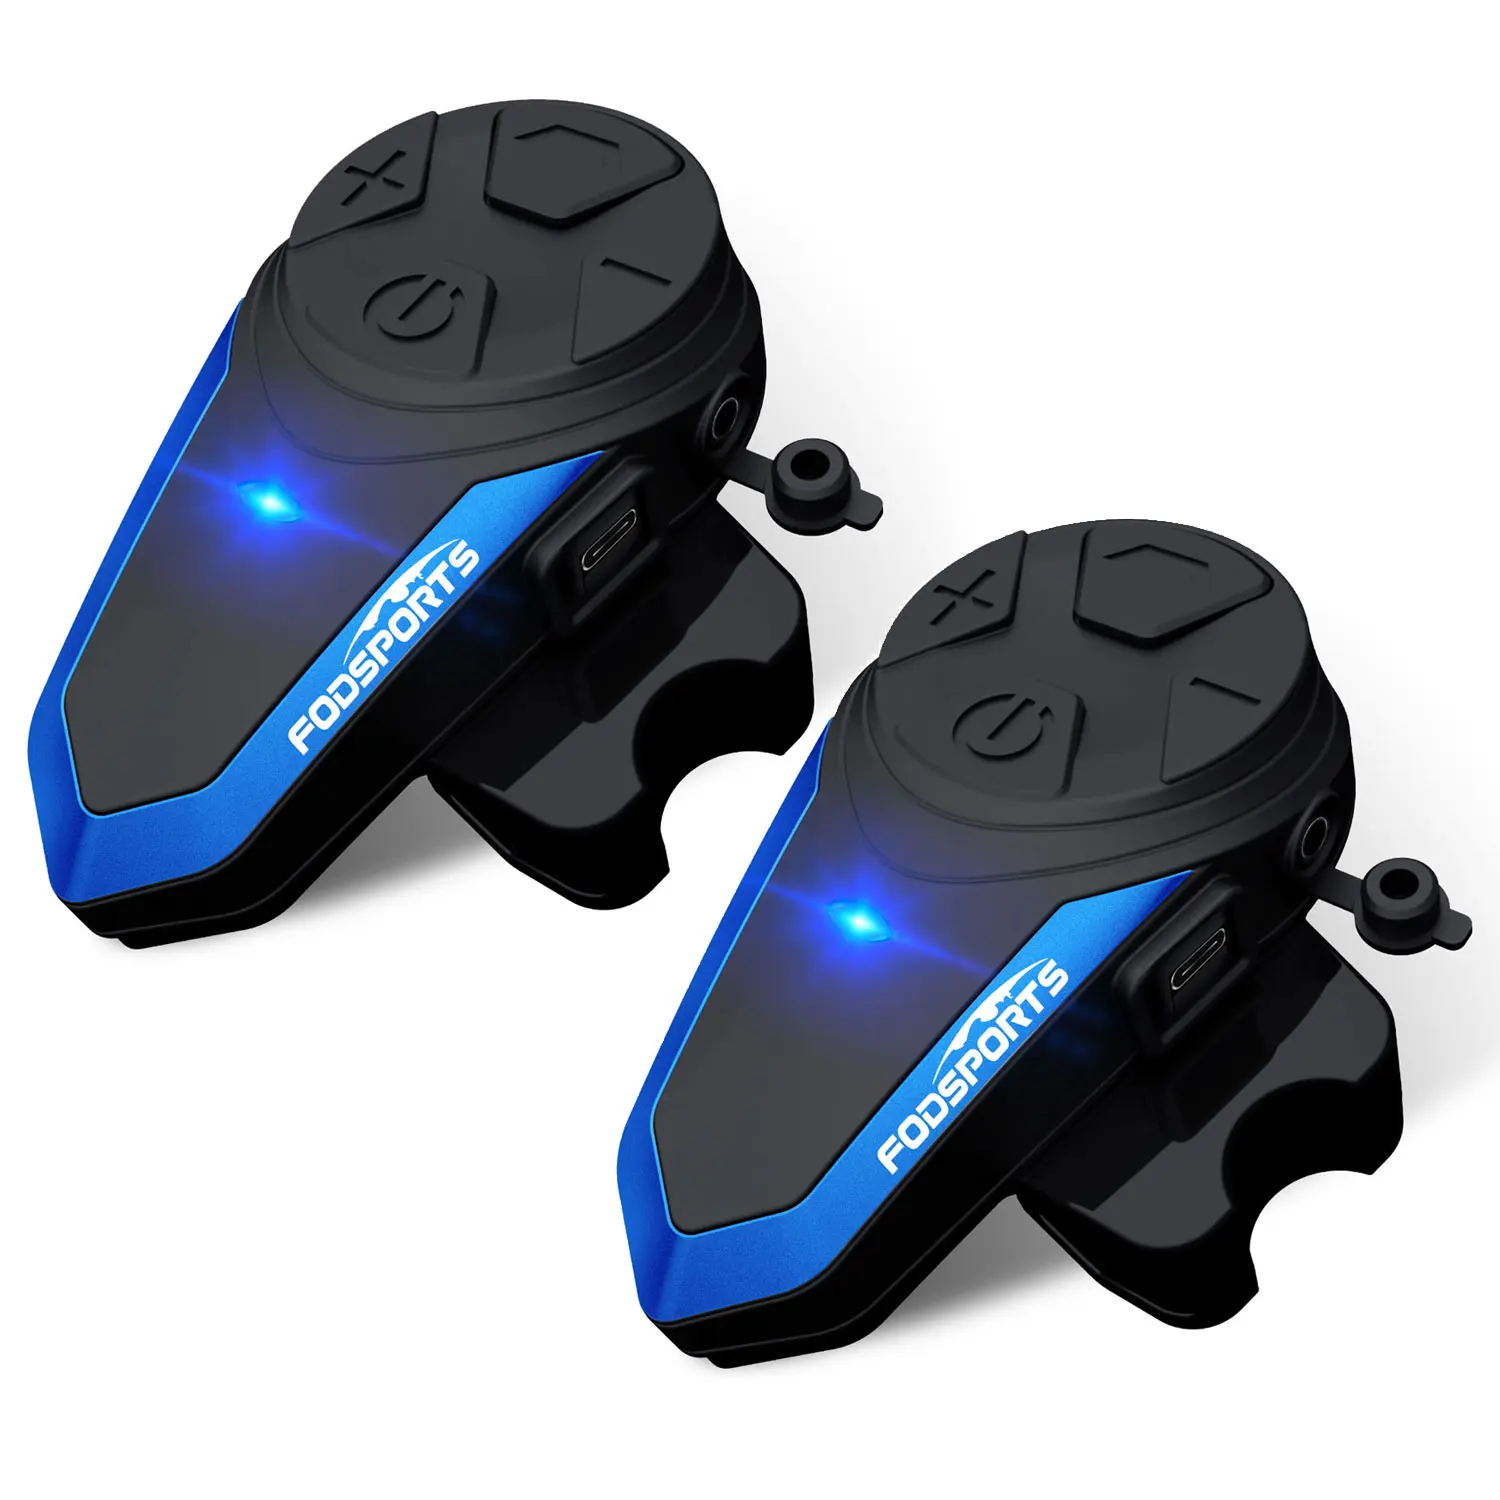 Fodsports 2 pcs BT-S3 Motorcycle Helmet Intercom Bluetooth Headset Waterproof Intercomunicador BT Interphone with FM Radio enlarge